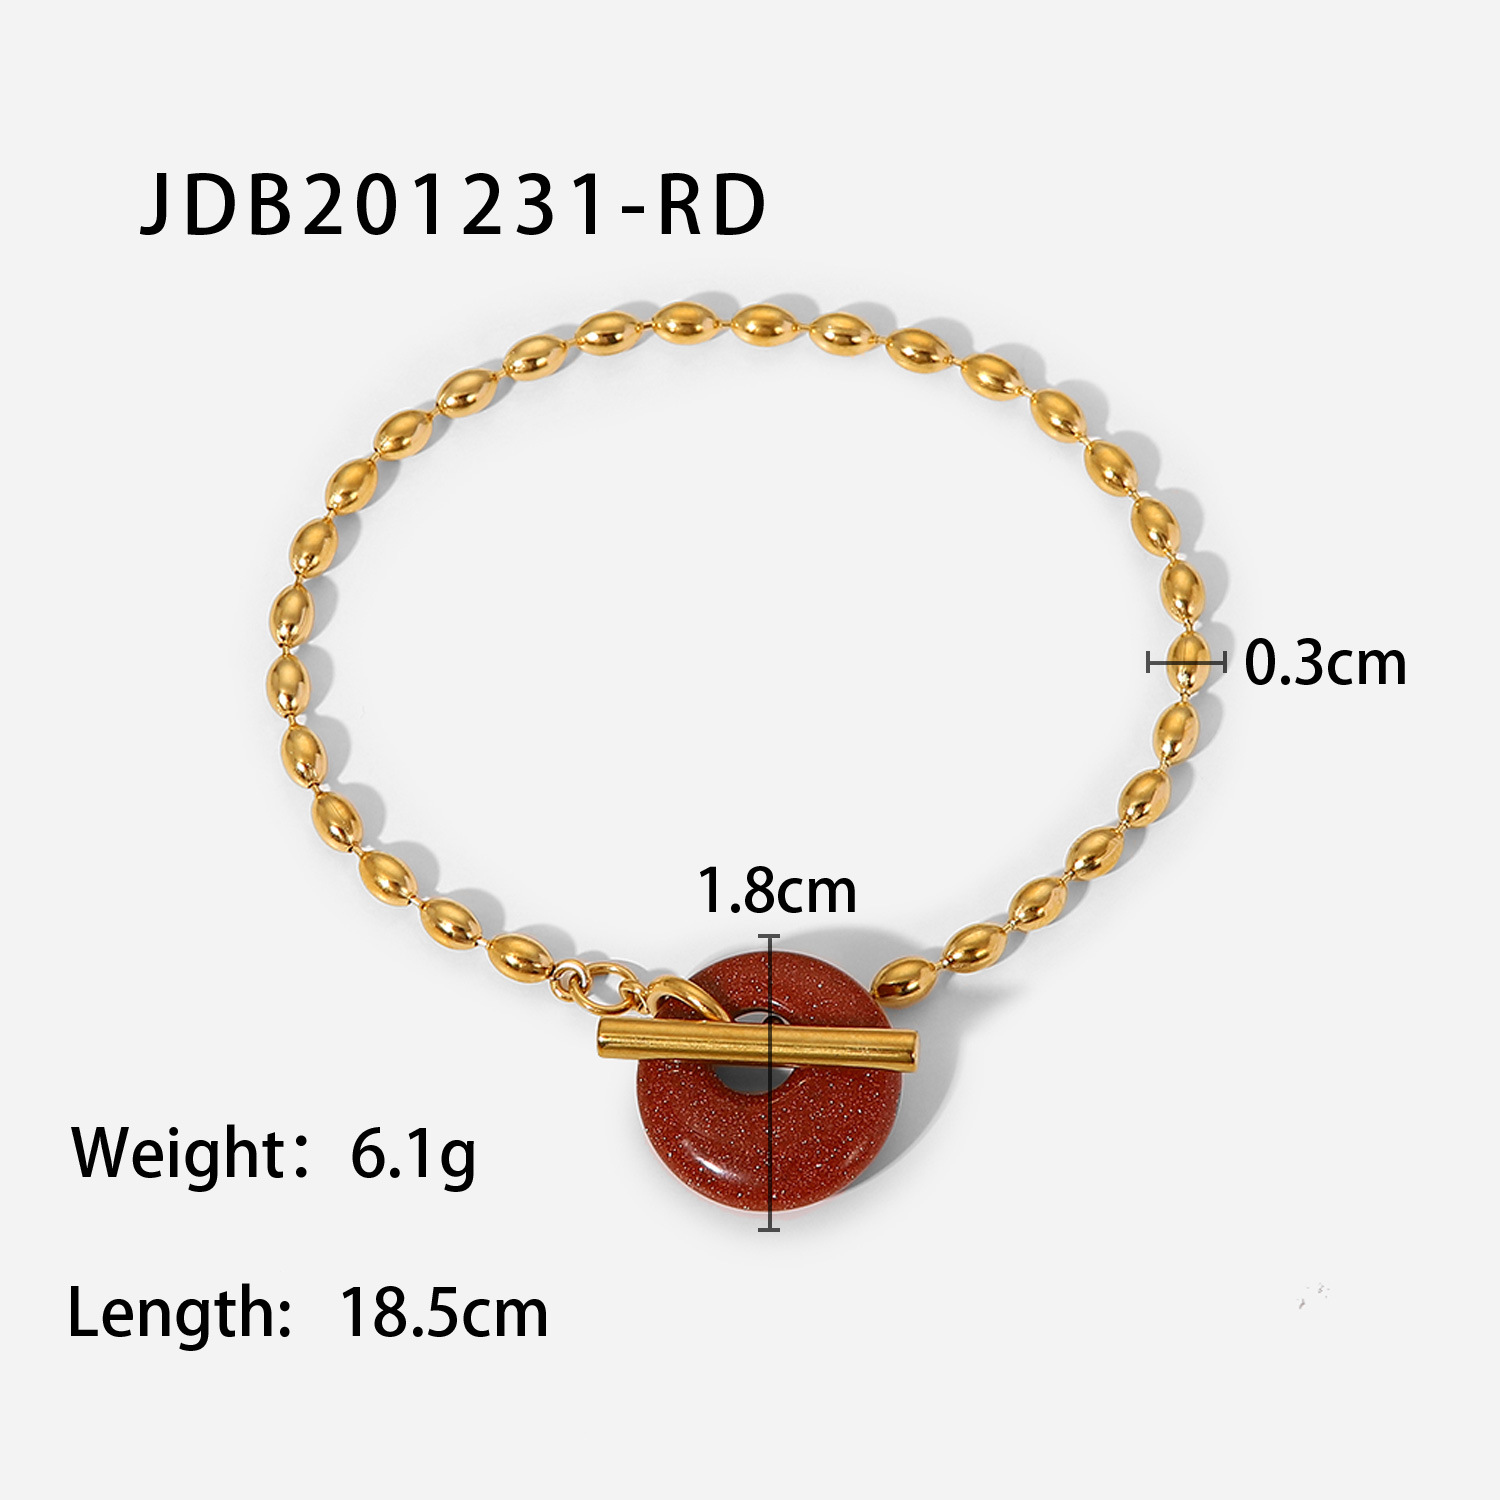 2:JDB201231-RD